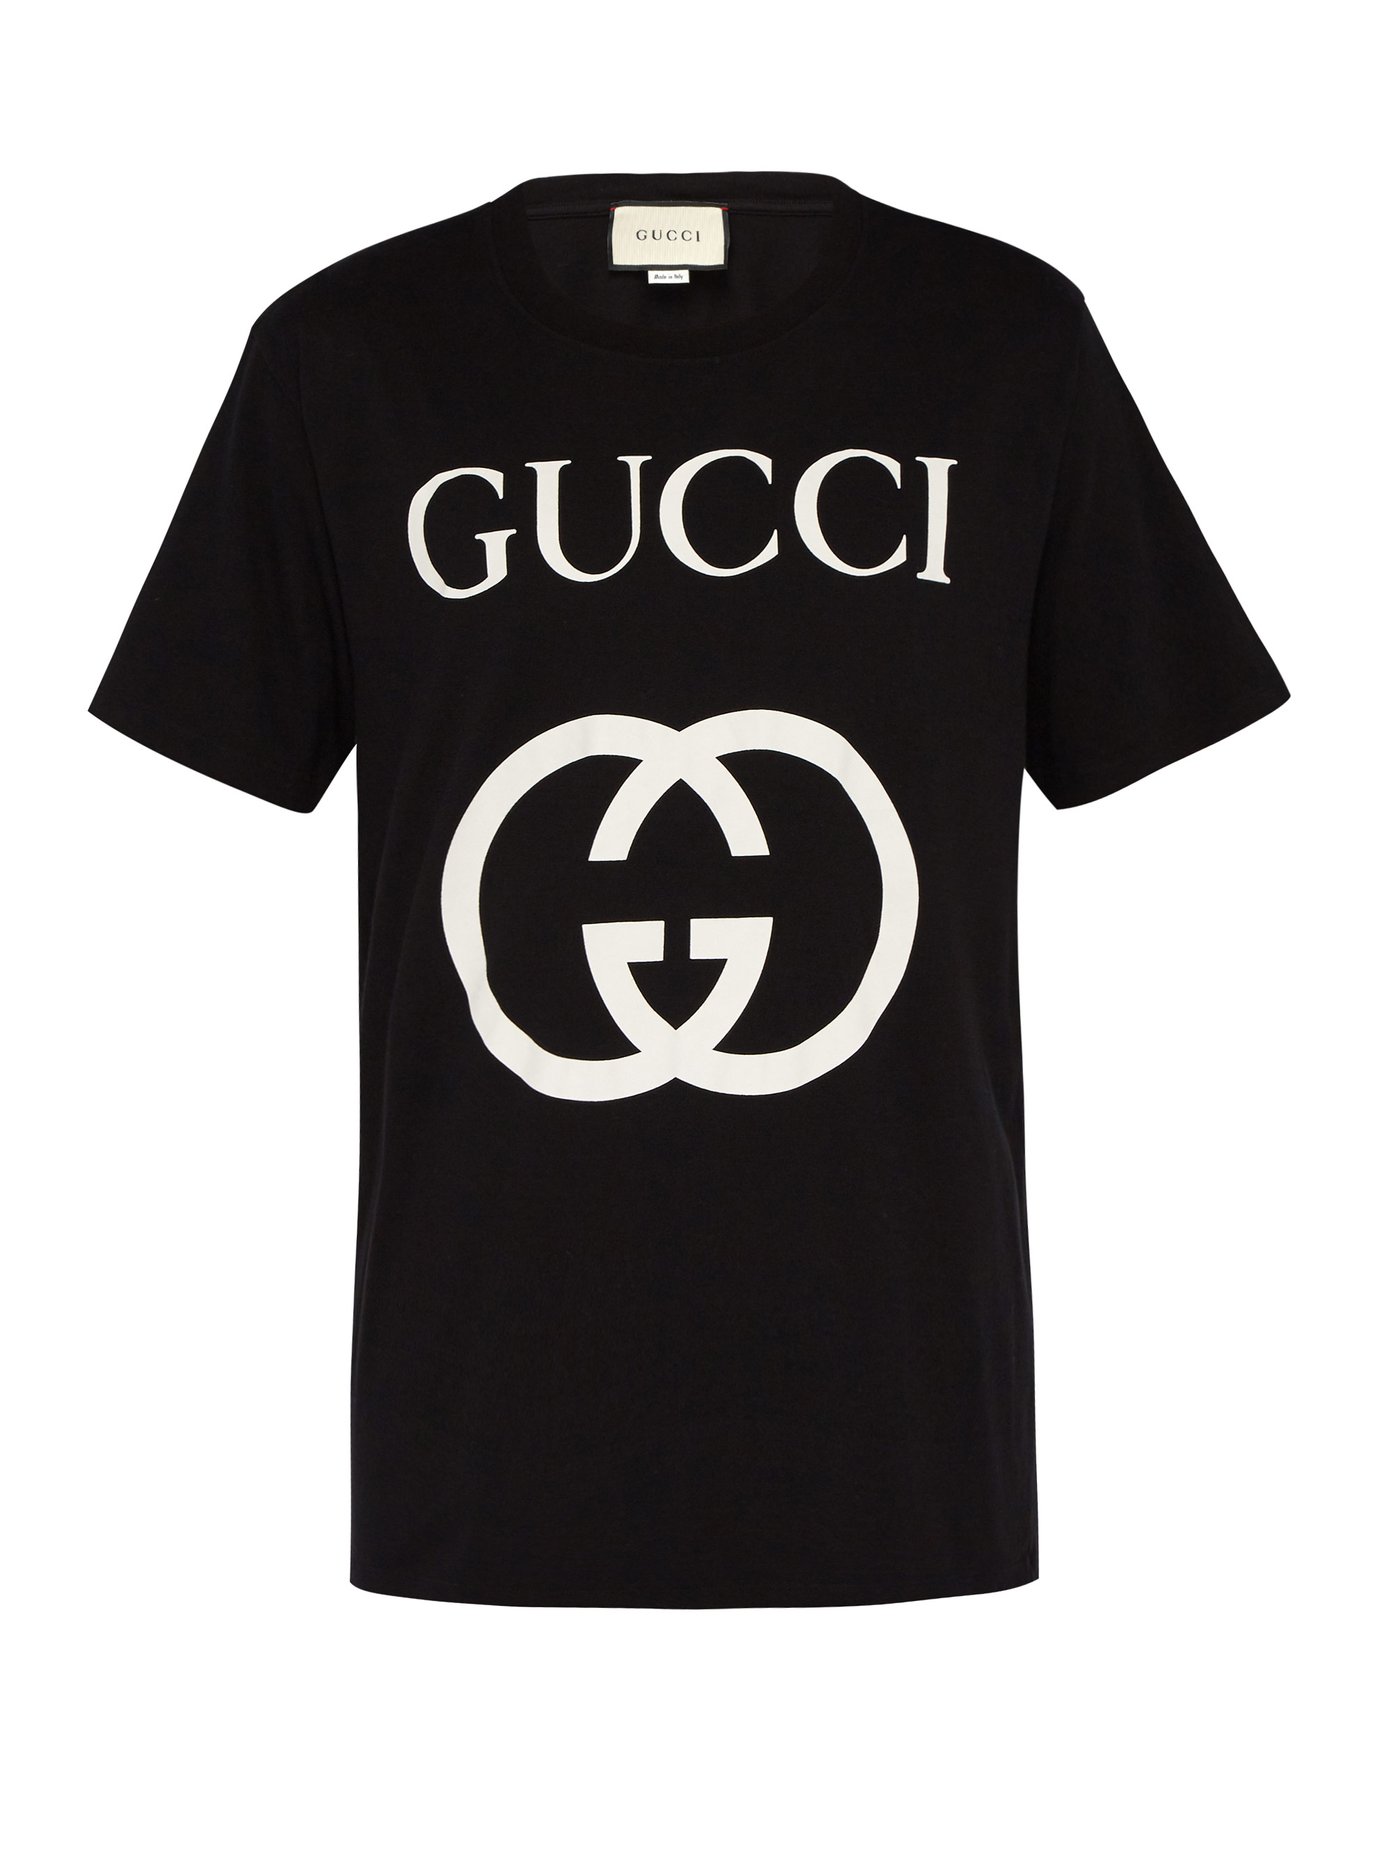 white and black gucci shirt